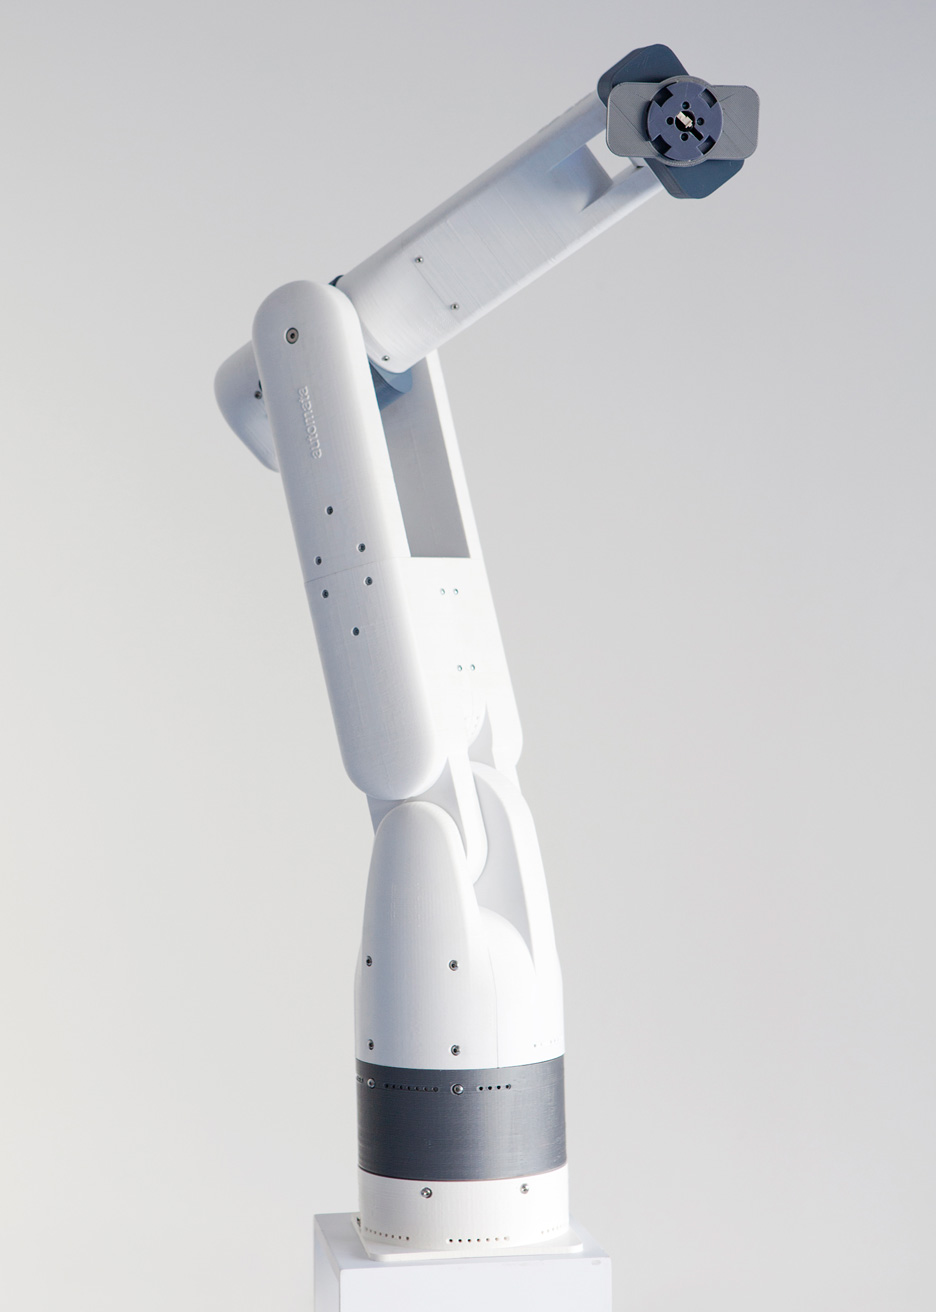 Eva plastic robotic arm by Automata